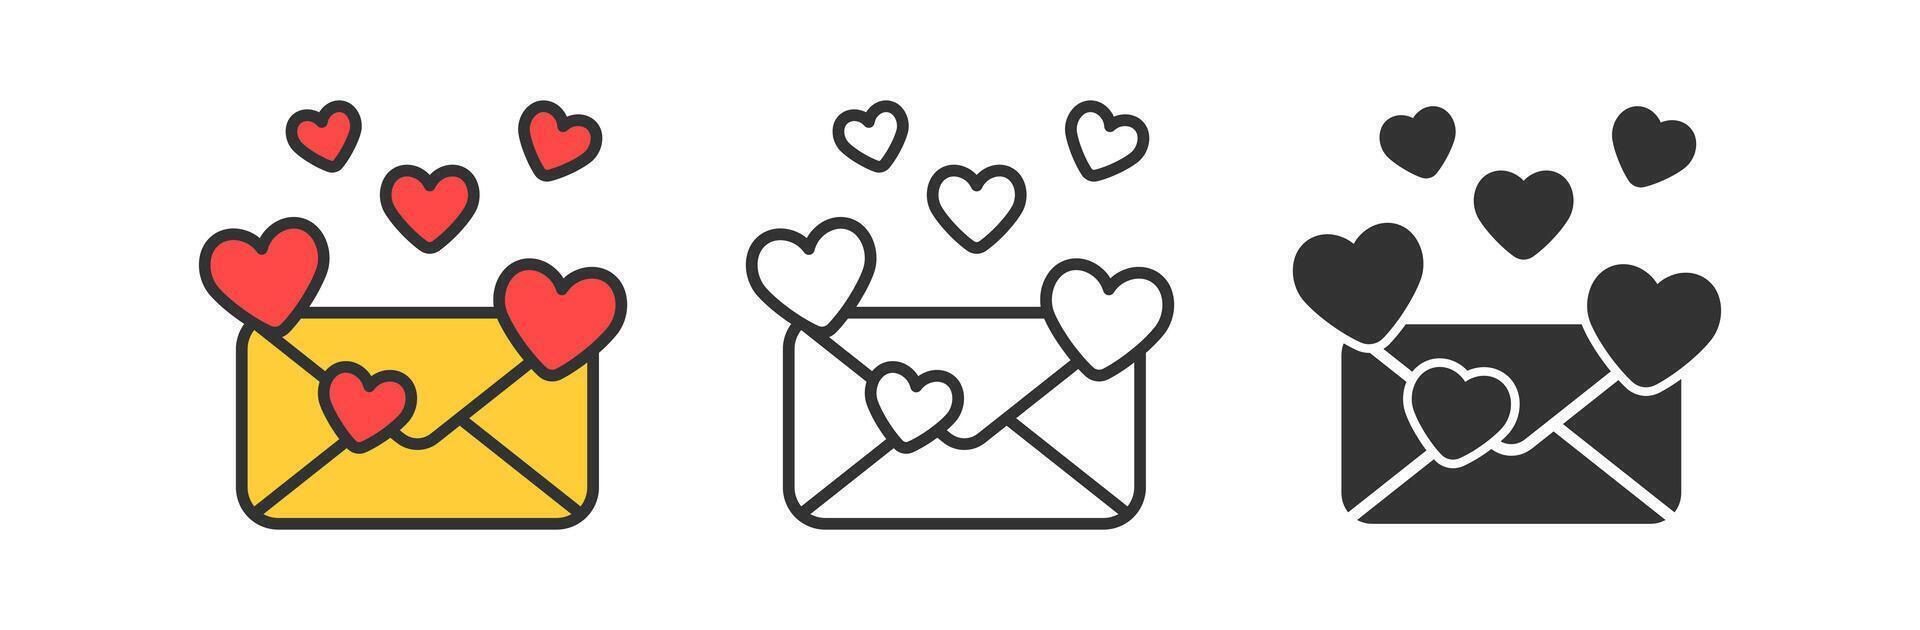 Love message icon. Valentine mail symbol. Heart envelope. Send romance letter. Romantic postcard. Vector illustration.